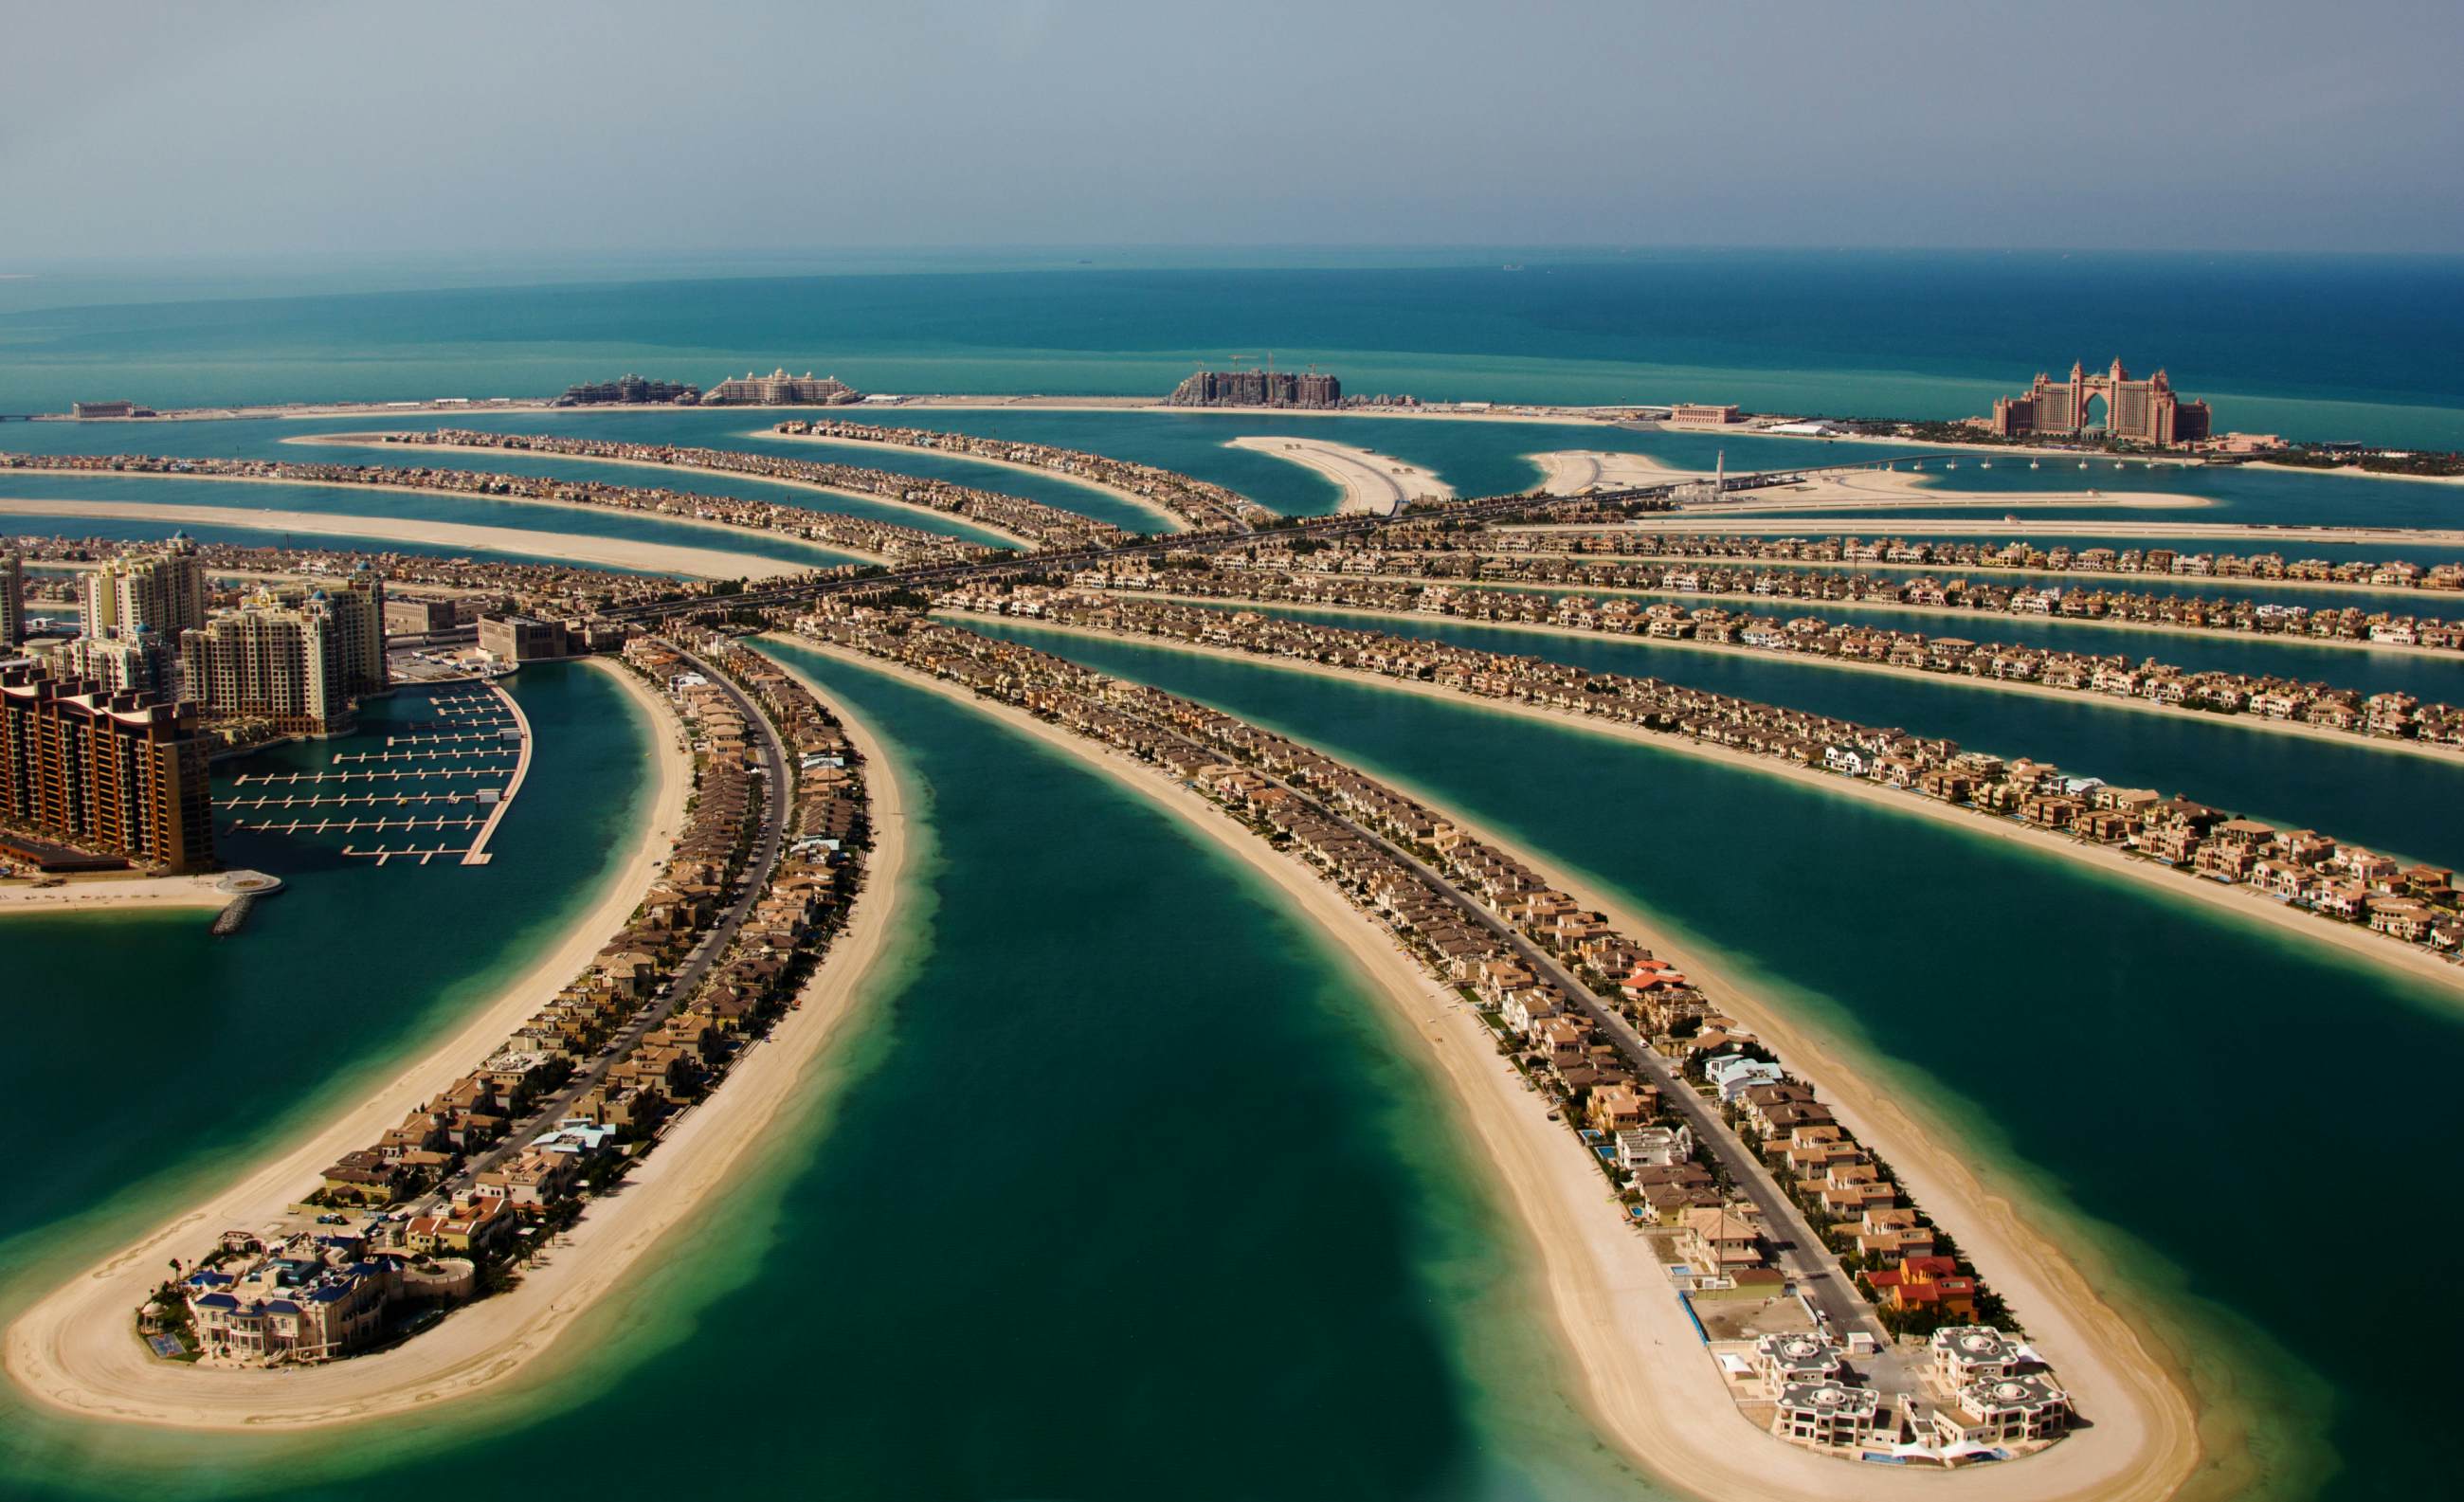 Dubai Marina & Palm Jumeirah travel - Lonely Planet | Dubai, United Arab Emirates, Middle East